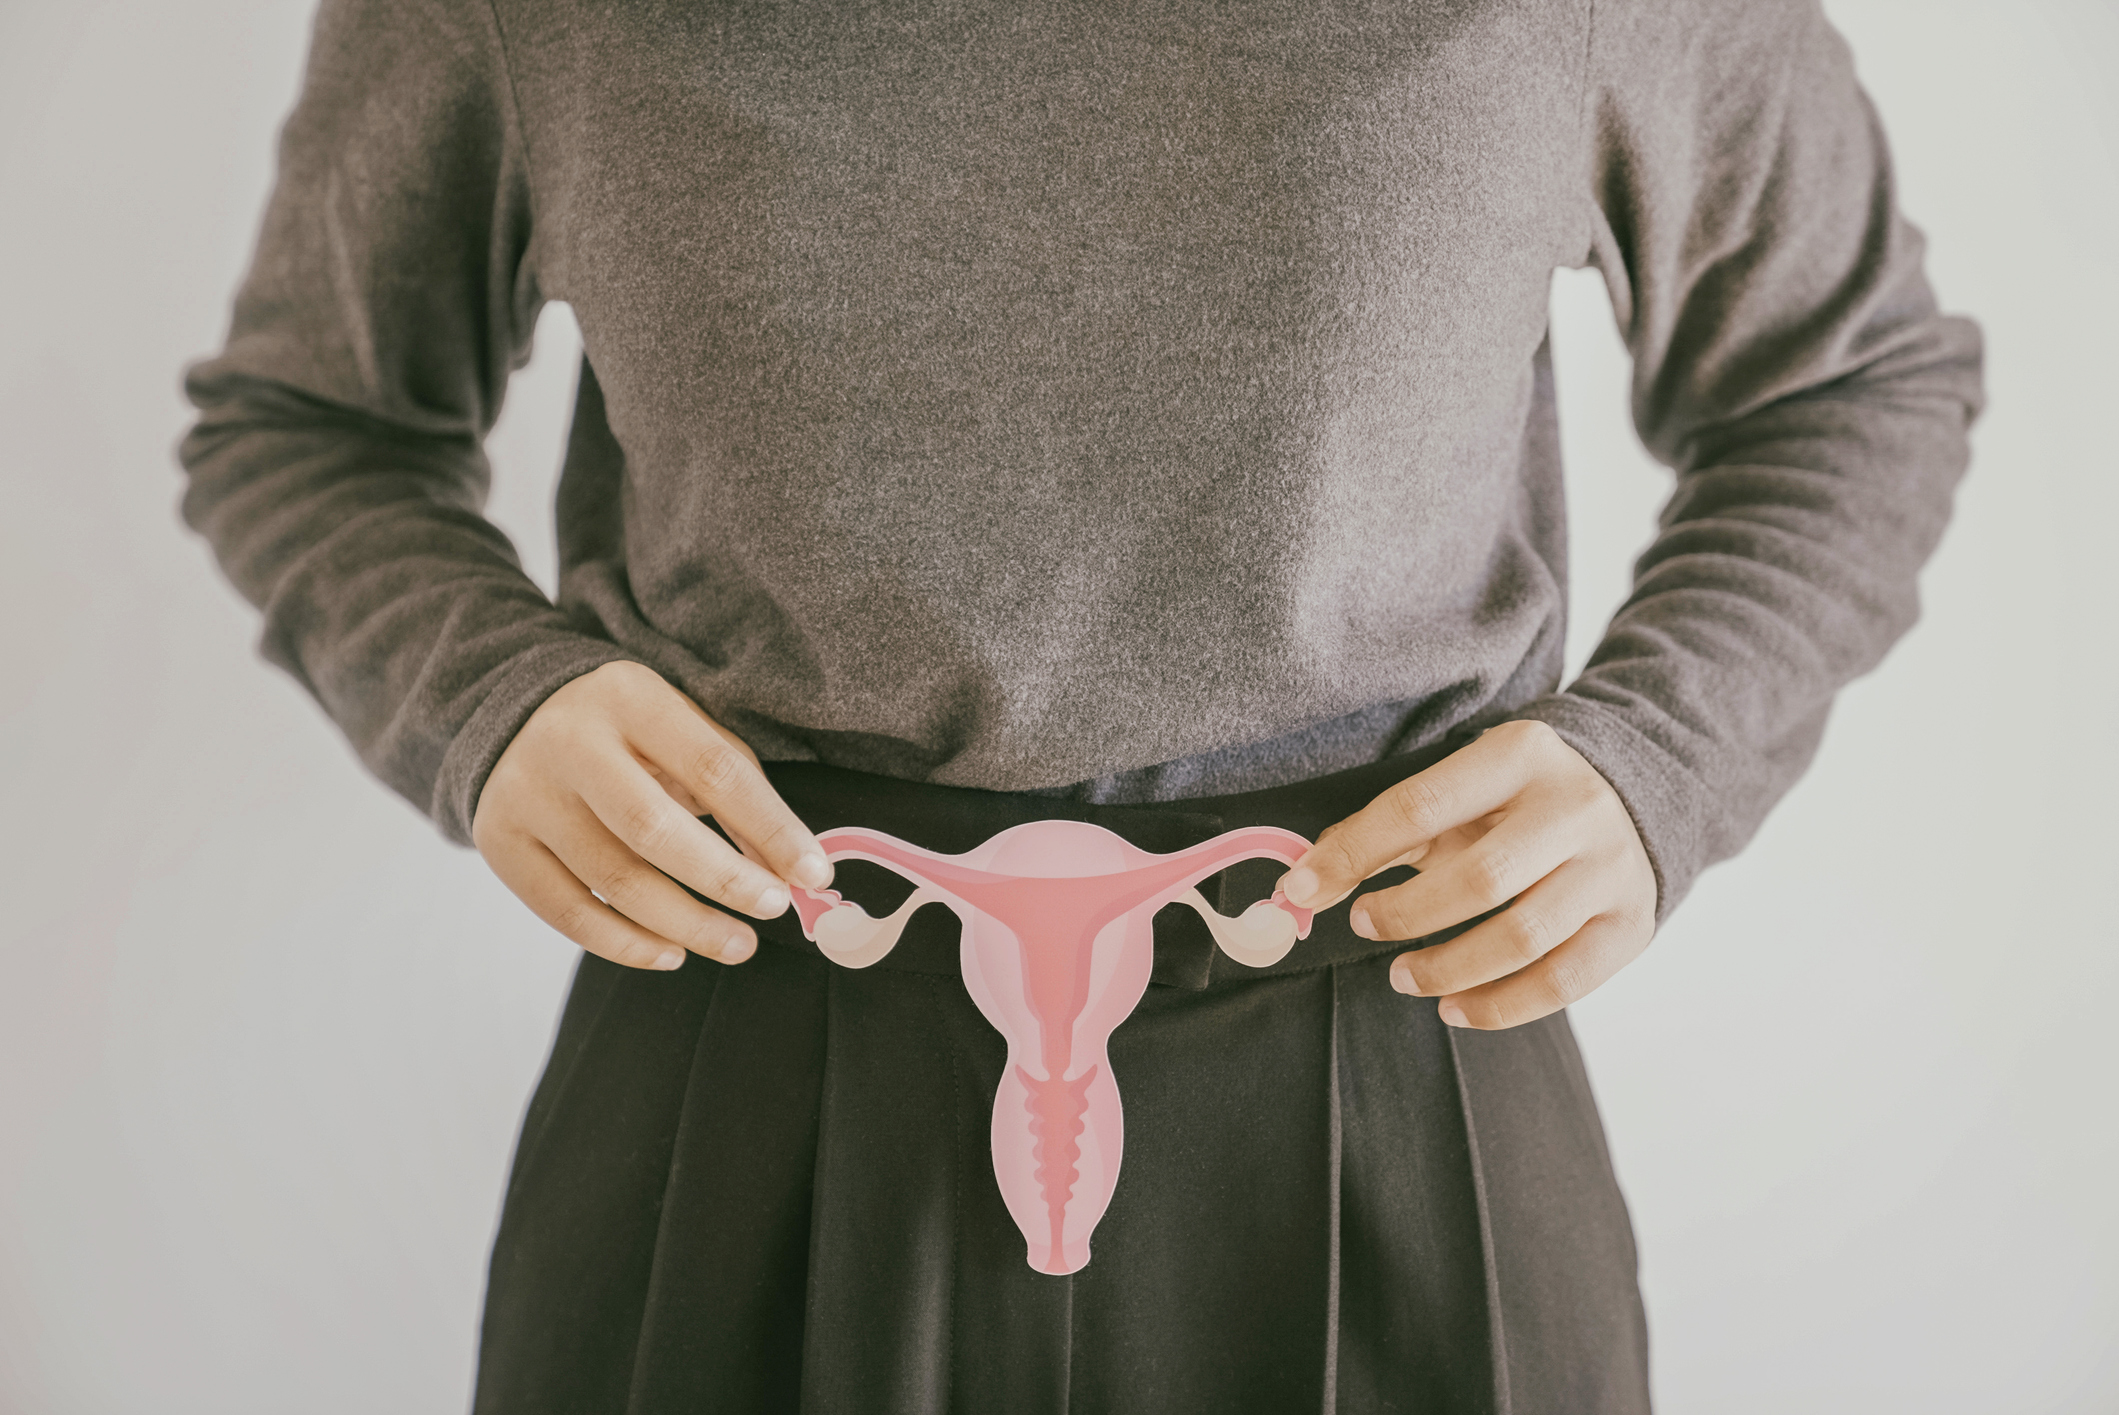 Study Links Cadmium Levels in Women’s Urine to Endometriosis